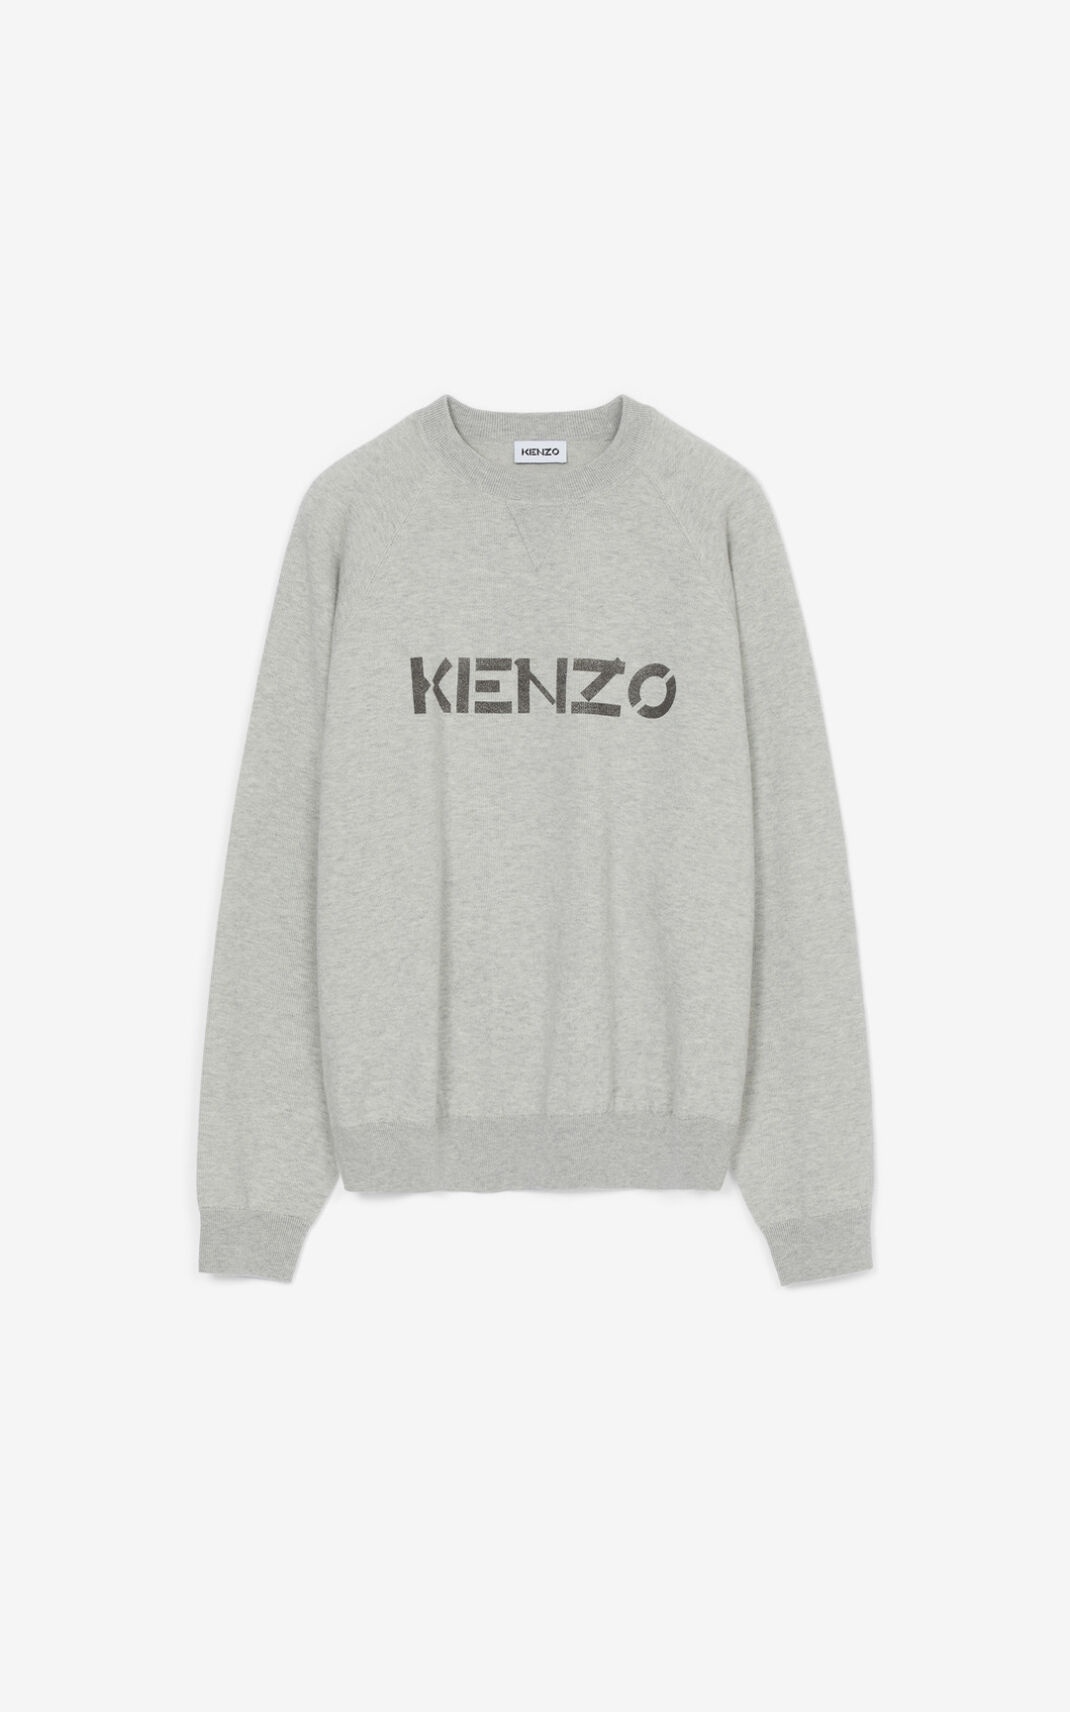 KENZO logo jumper - 1